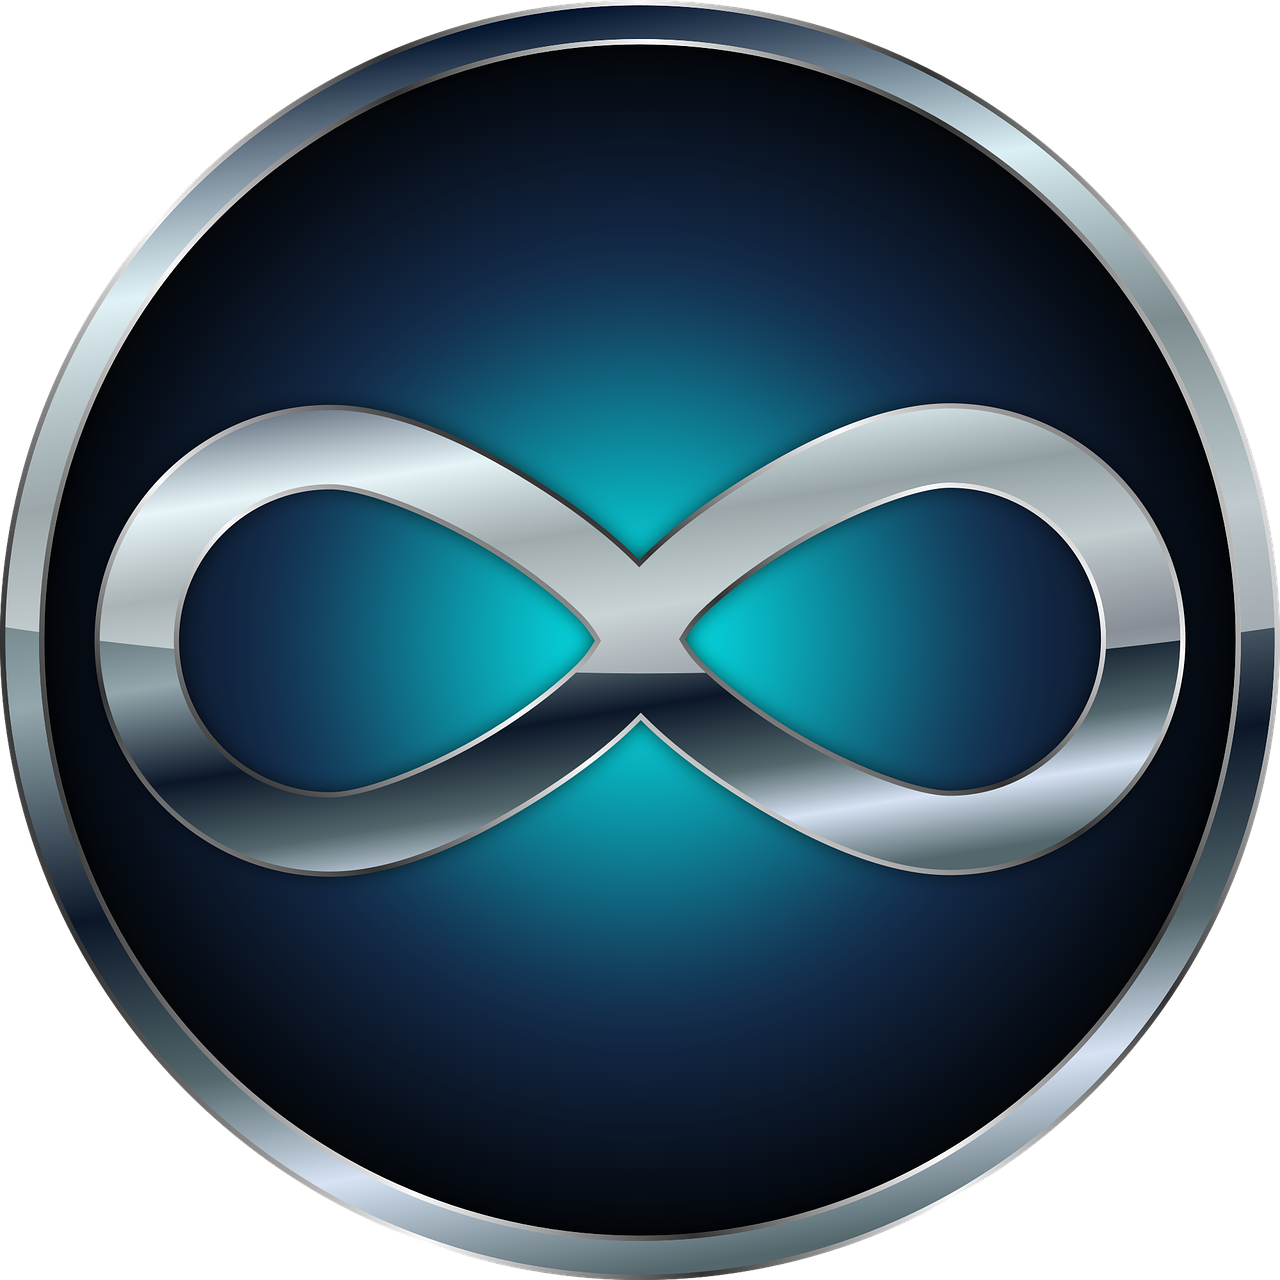 Metallic Infinity Symbol Design